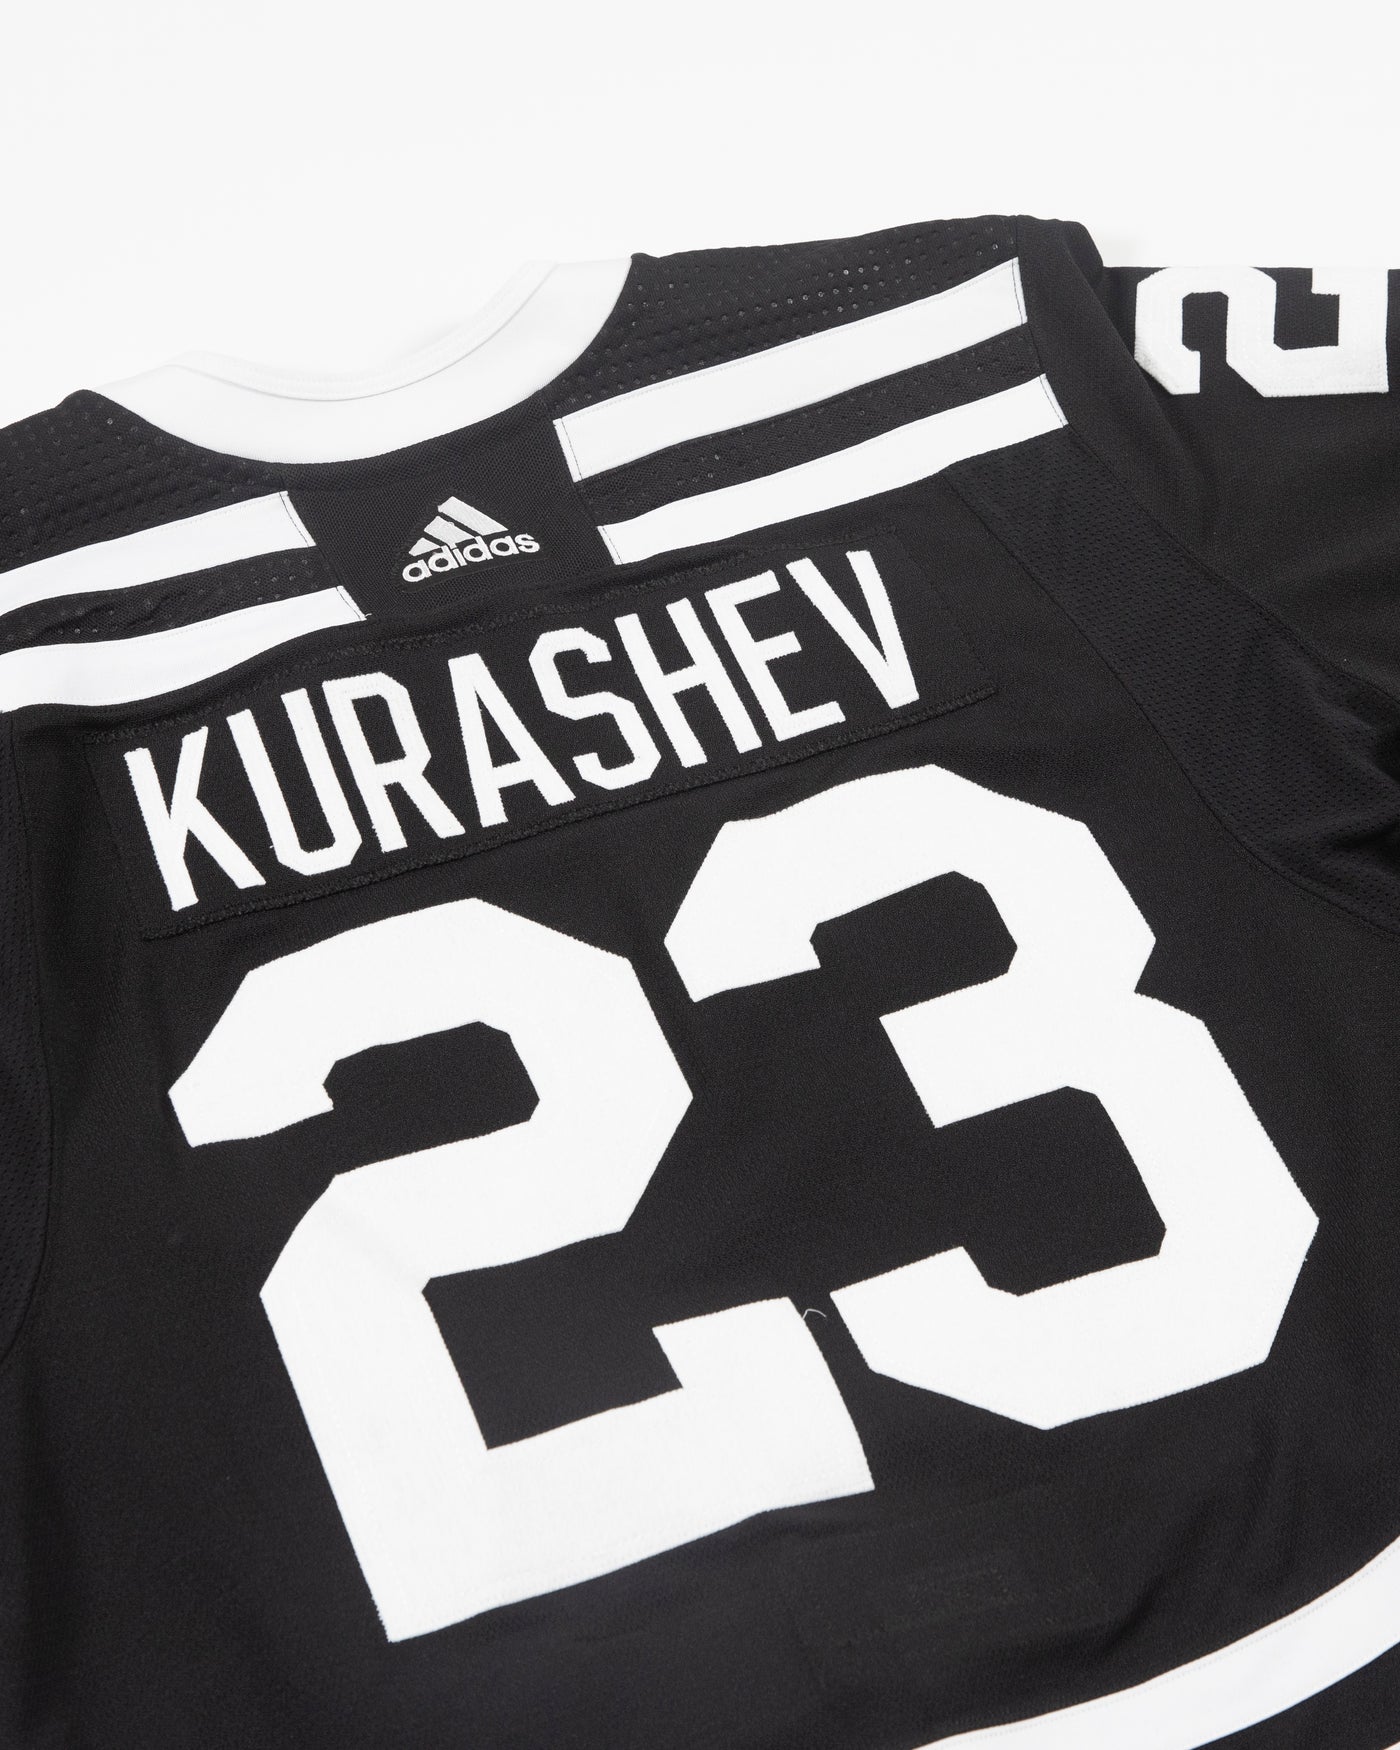 Autographed Chicago Blackhawks Philip Kurashev team issued alternate jersey - alt back view